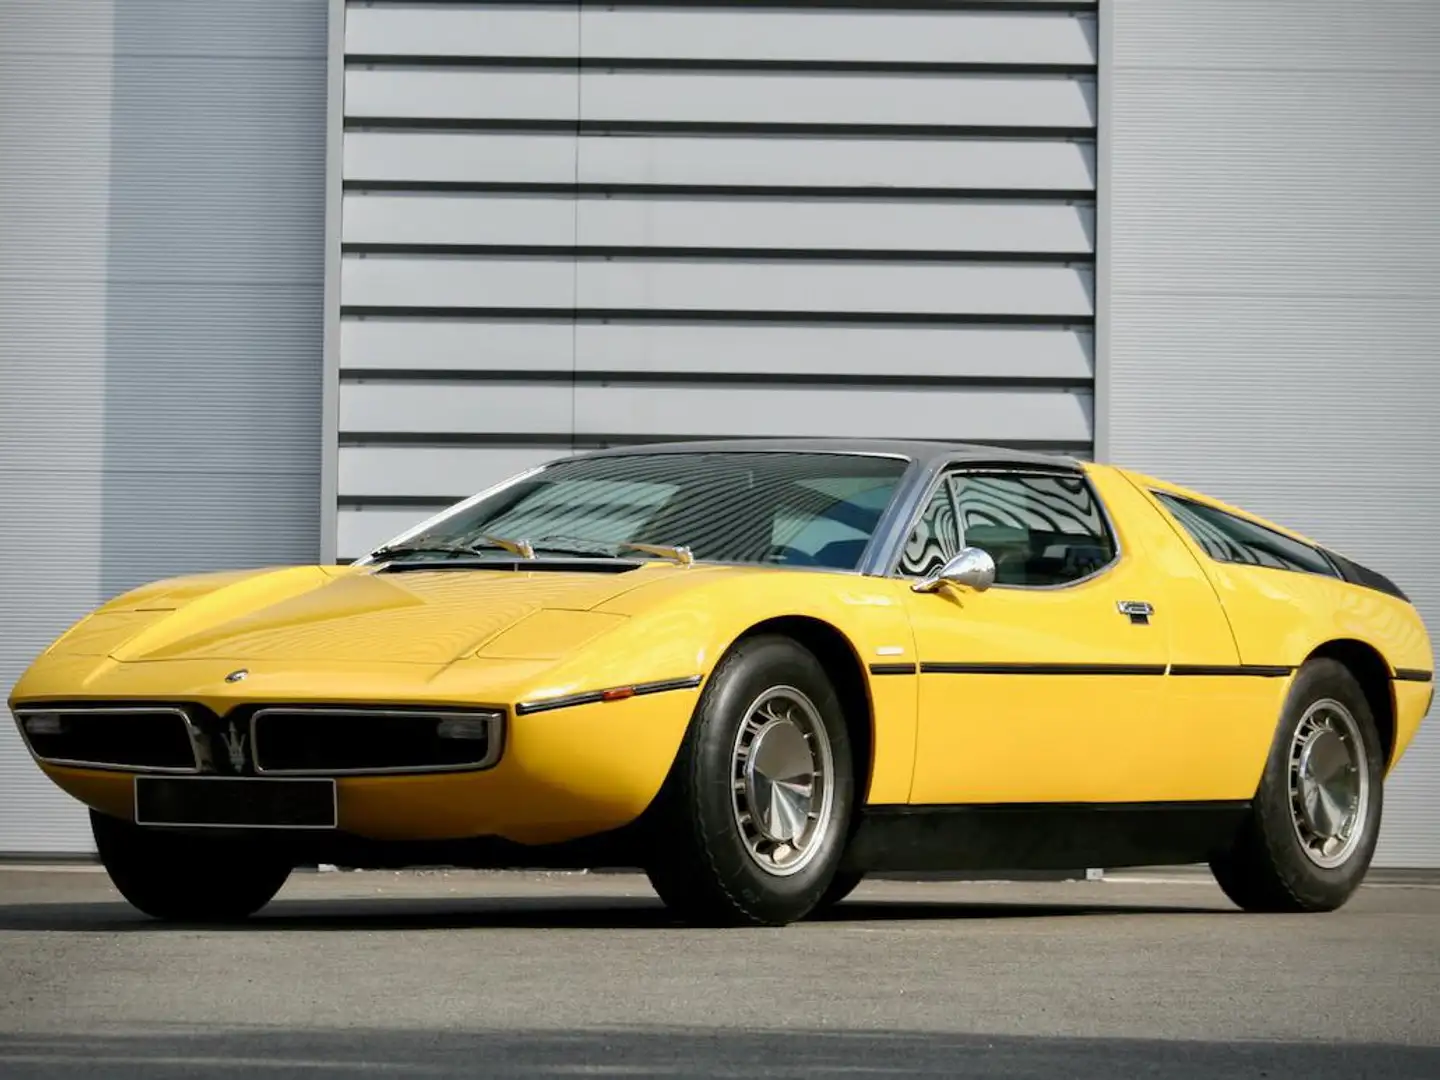 Maserati Bora Yellow - 2